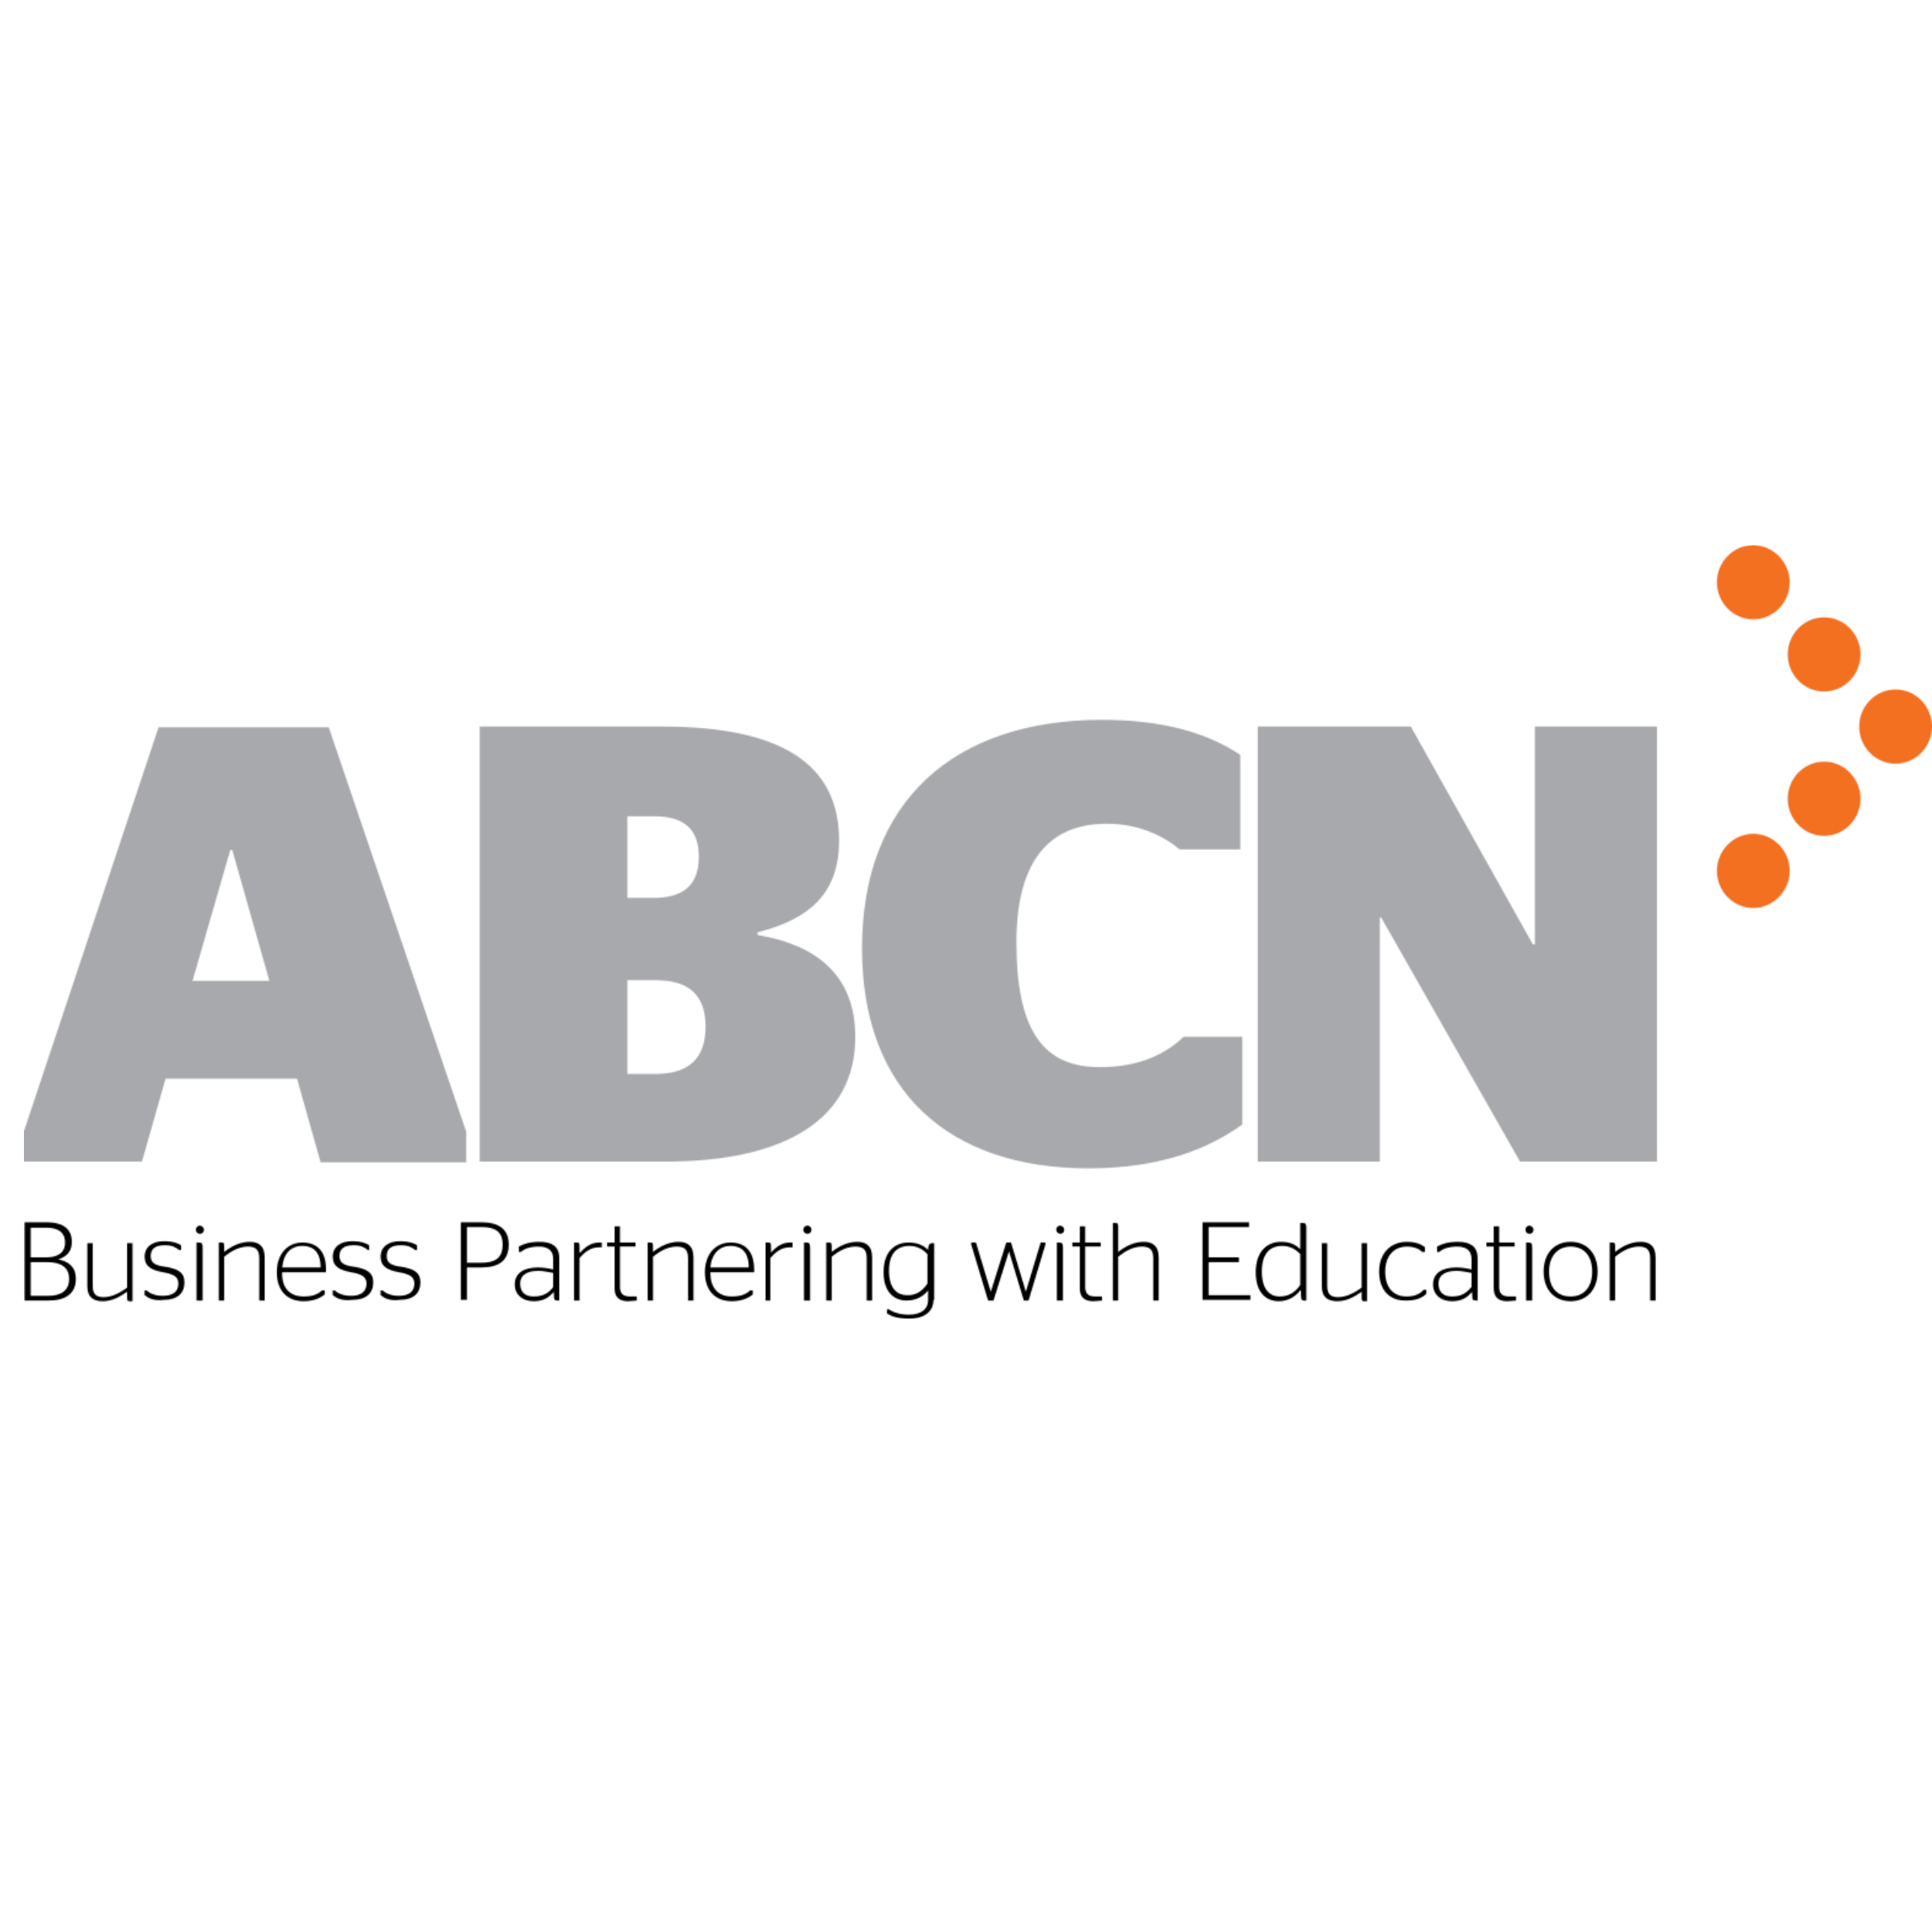 ABCN : Brand Short Description Type Here.